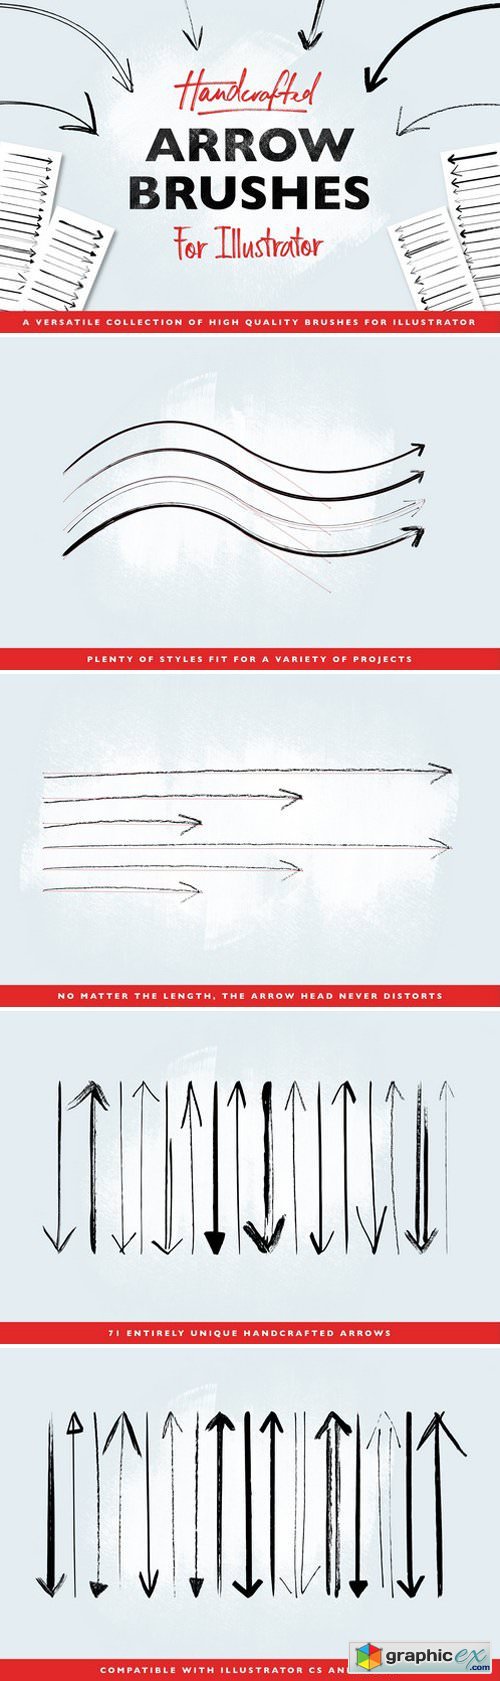 arrow brushes illustrator free download